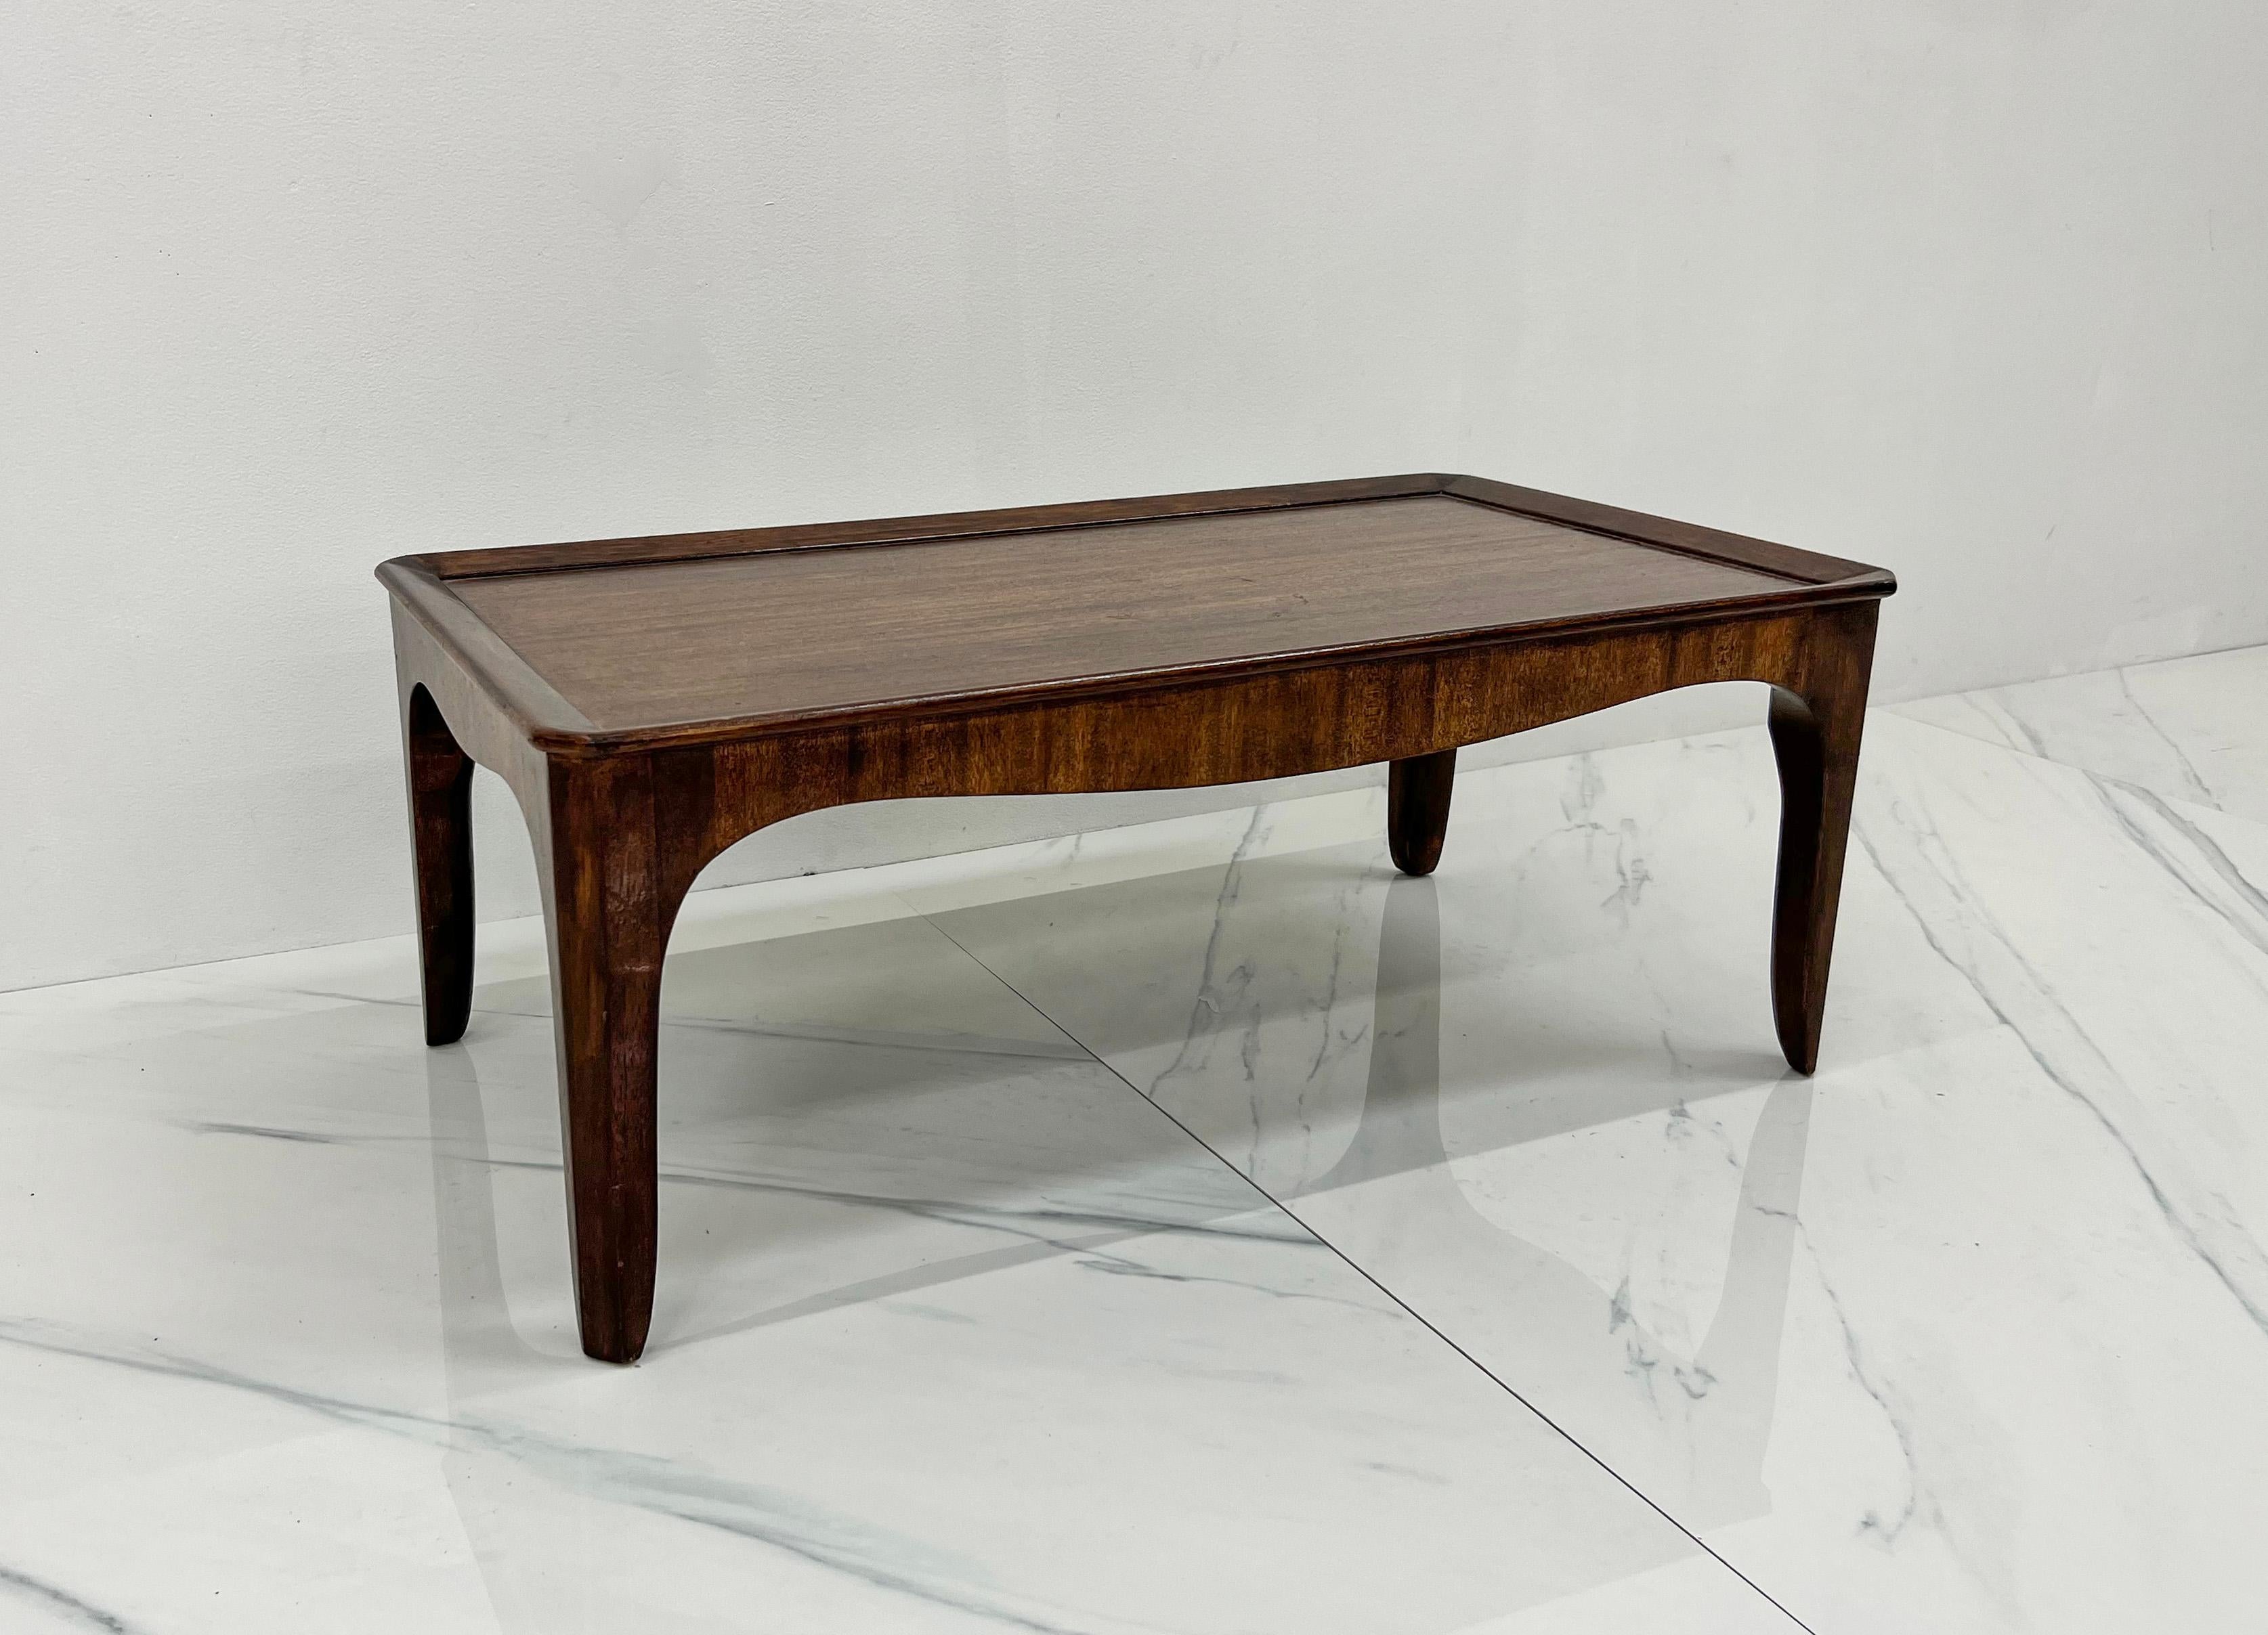 Early Rare Edward Wormley Mahogany Coffee Table, Dunbar Furniture, 1940's For Sale 1